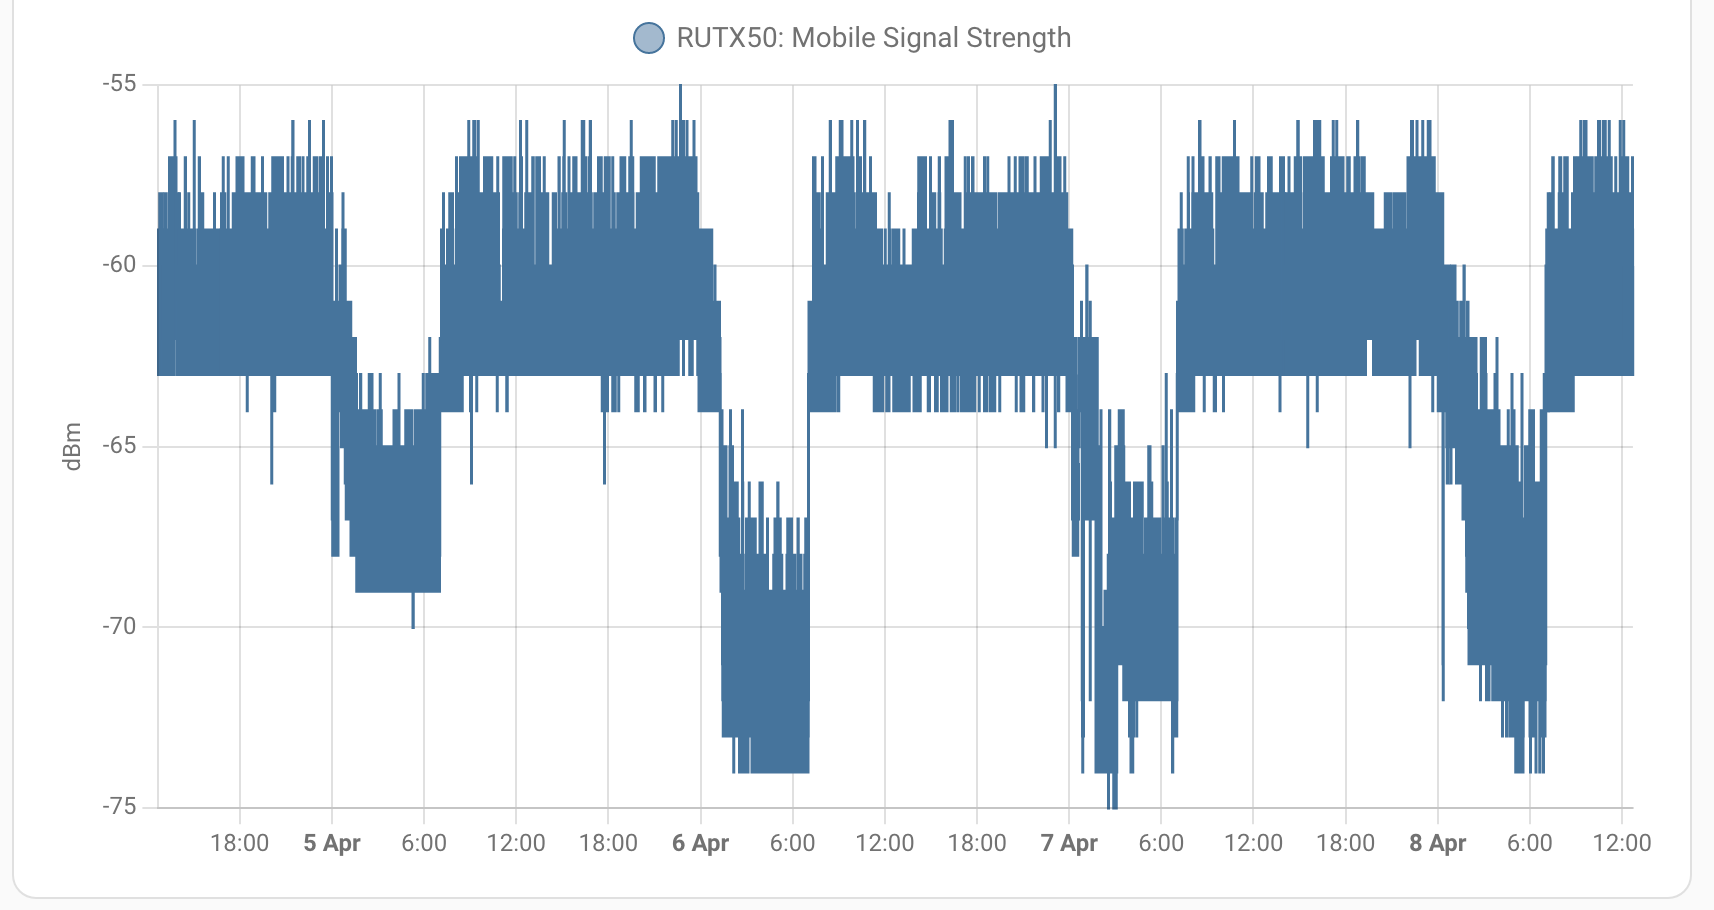 RUTX50 RSSI signal strength